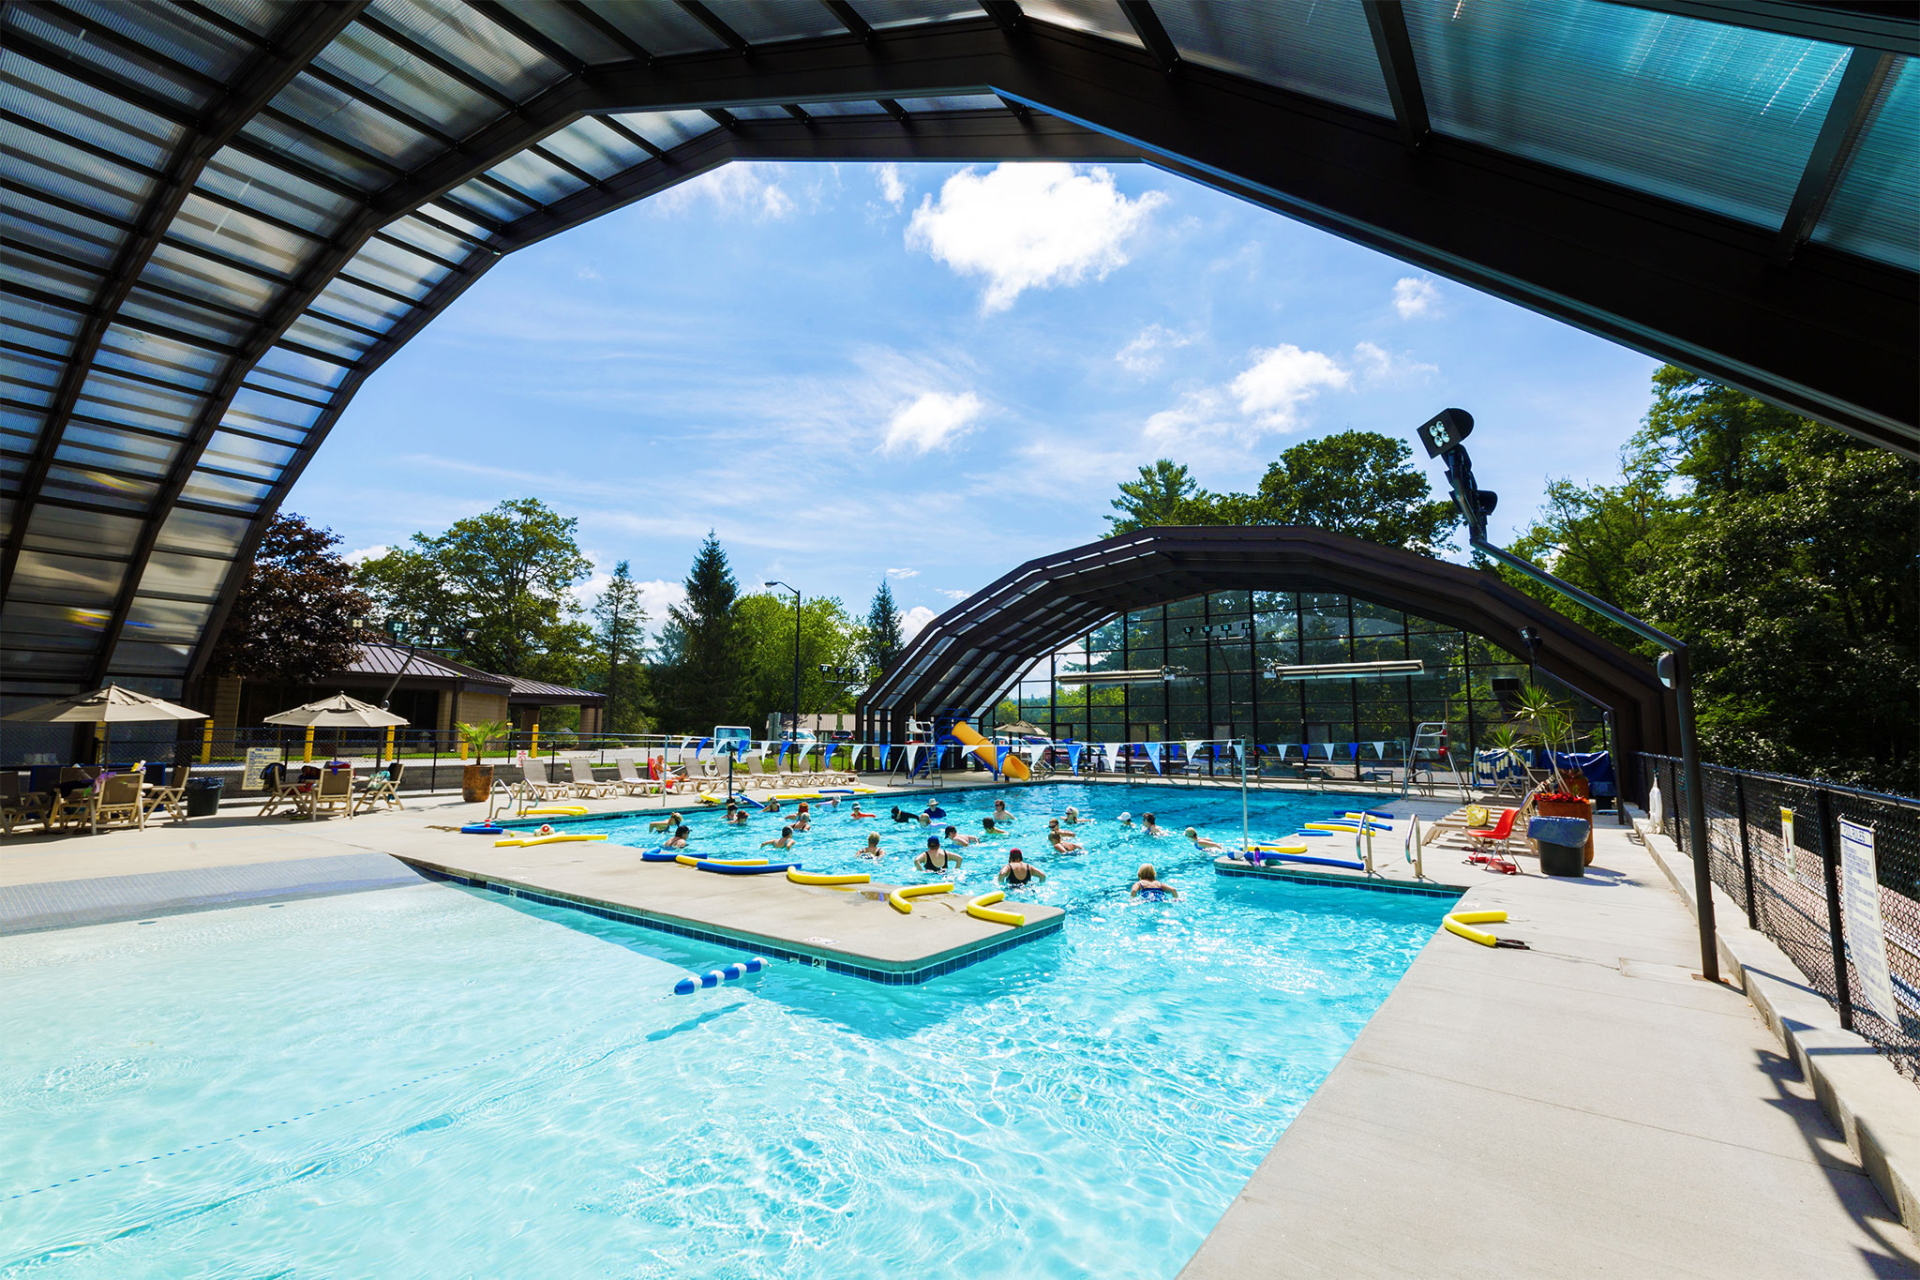 DynaDome Custom Non-Profit Retractable Enclosure - Pool - Town of Highlands Recreational Pool, Highlands, NC